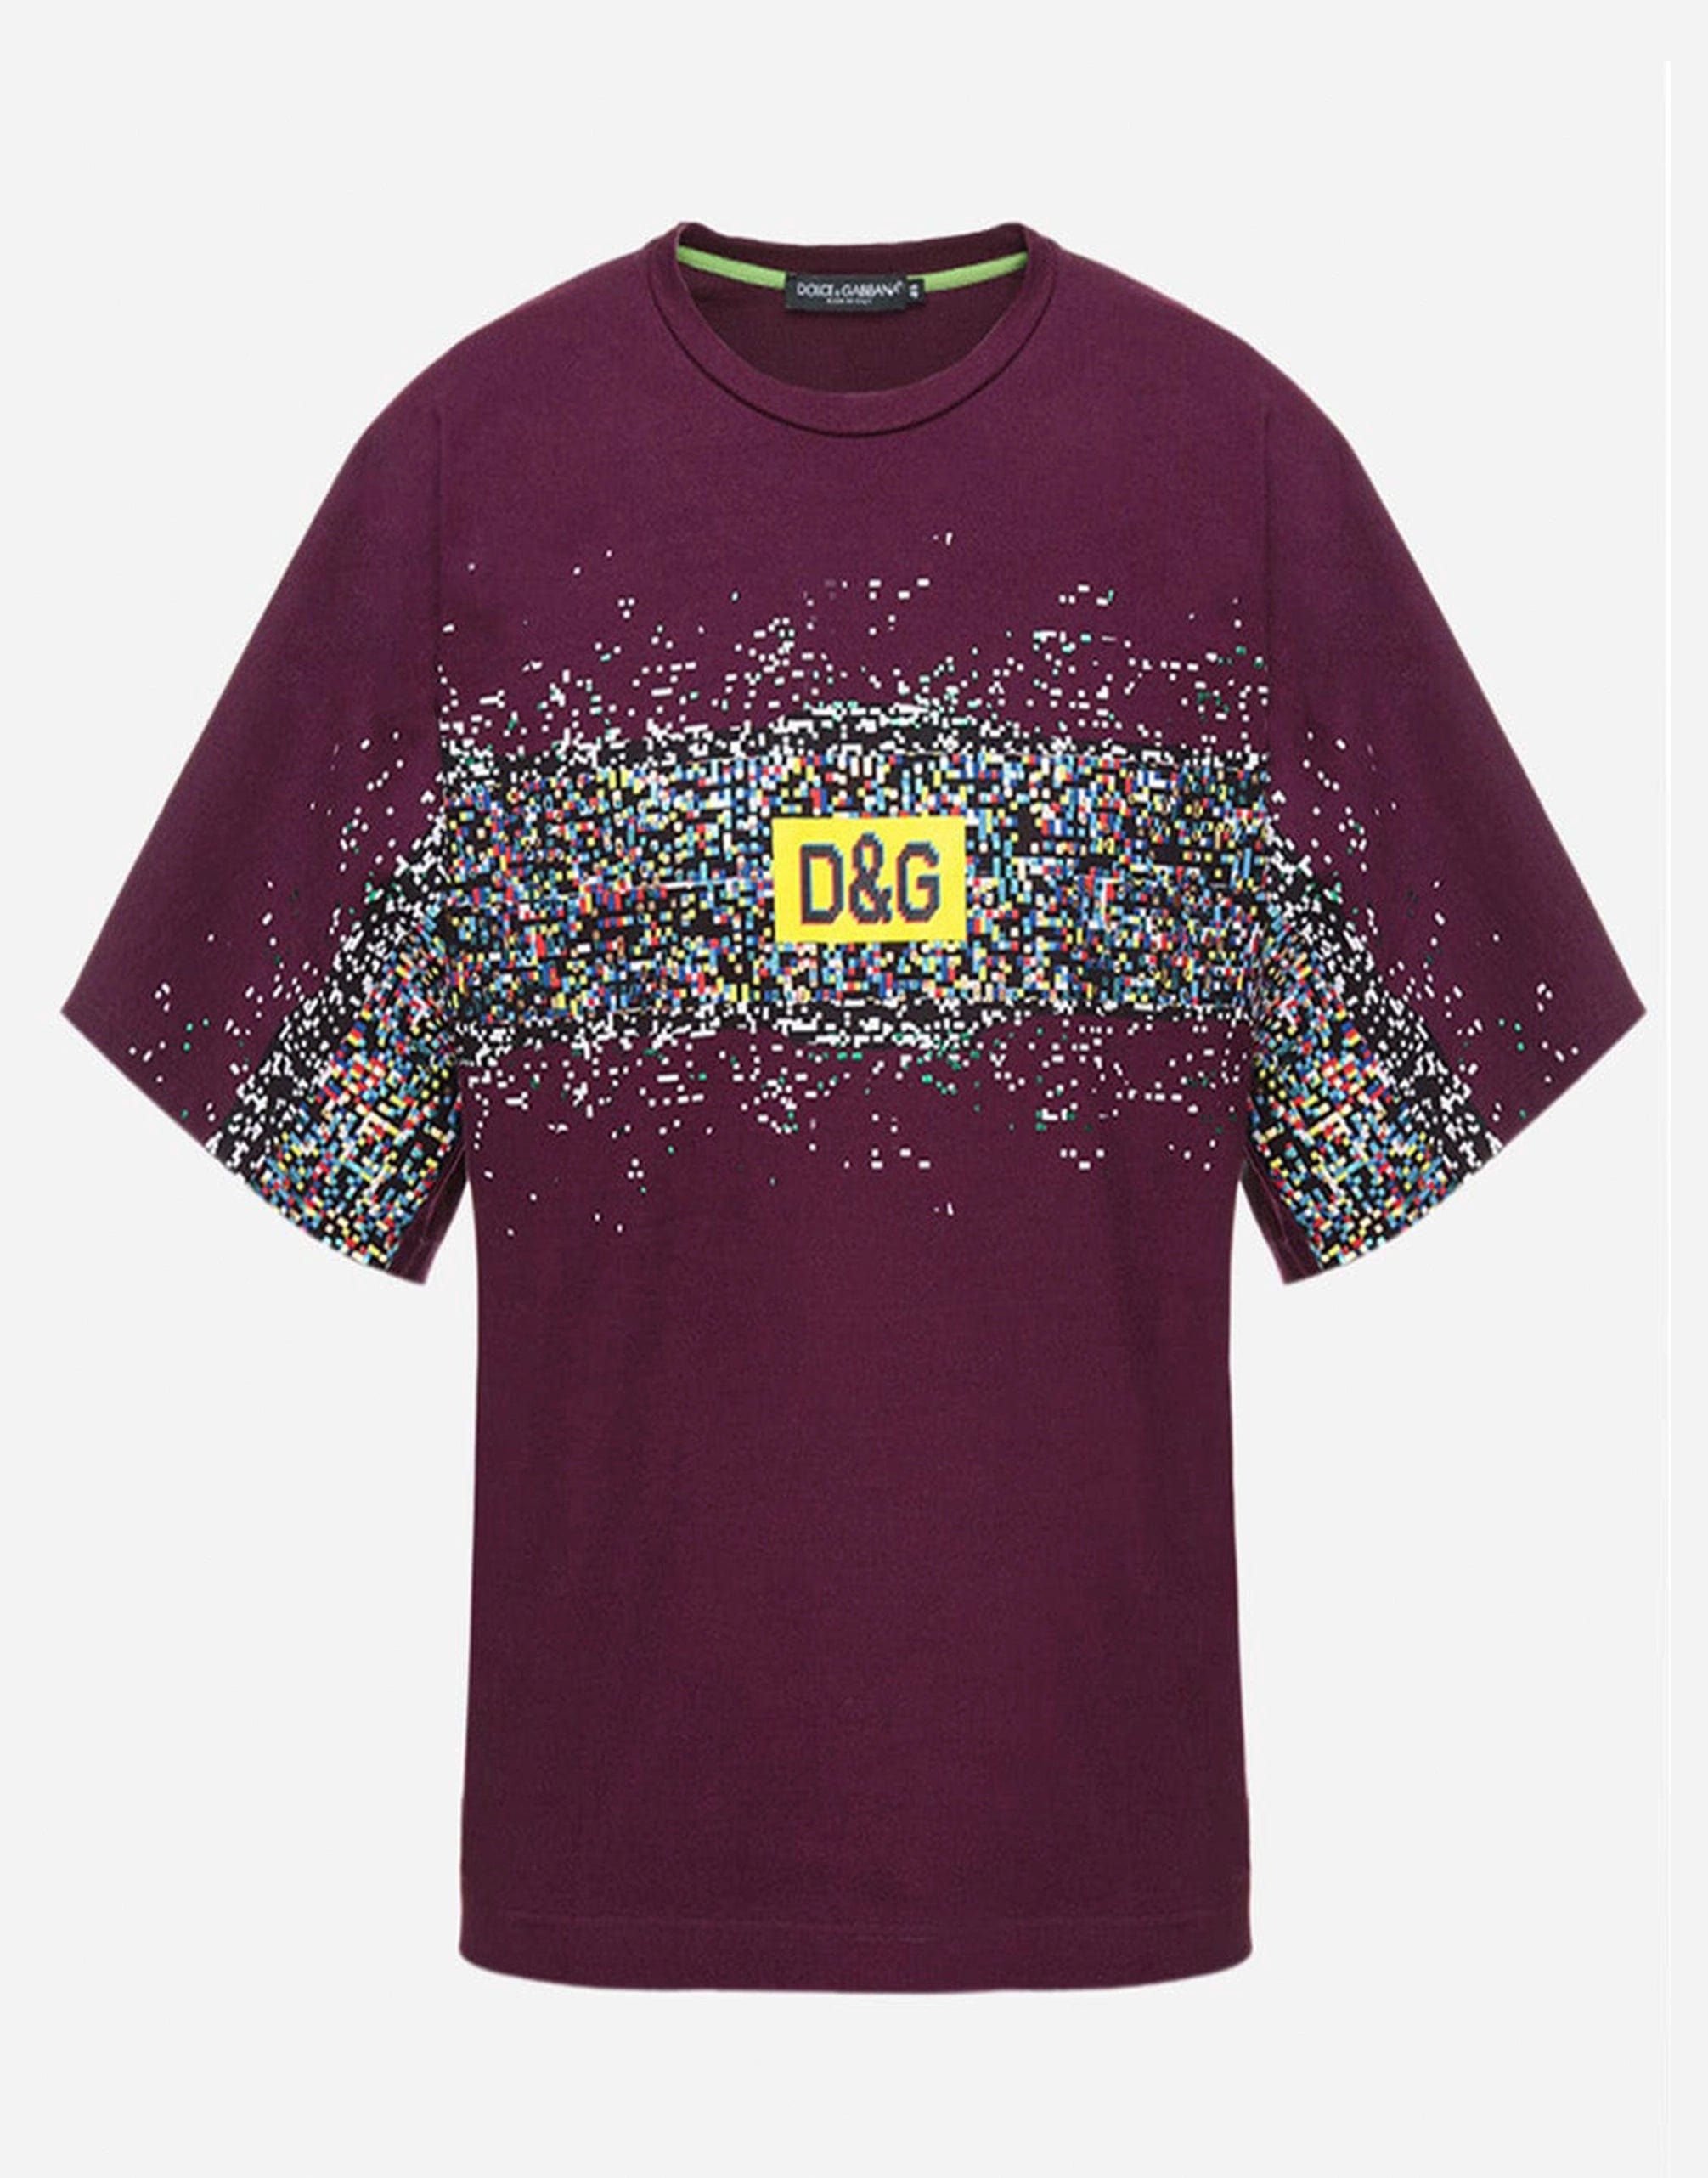 Dolce & Gabbana Glitch-Print T-Shirt